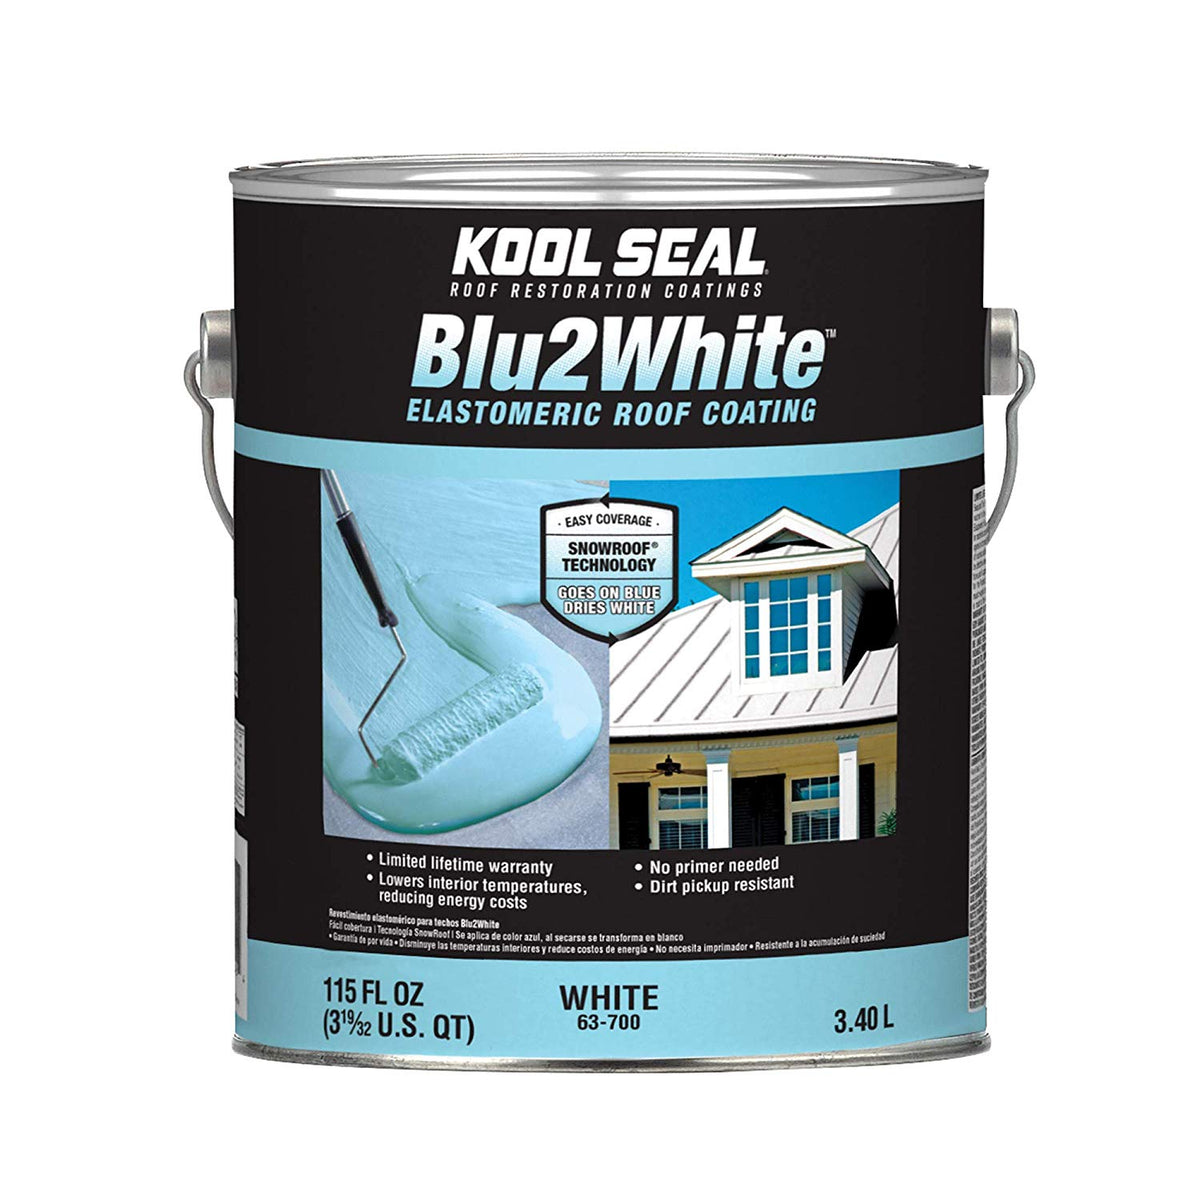 Kool Seal KS0063700-16 Blu2White Elastomeric Roof Coating, White, 1-Gallon